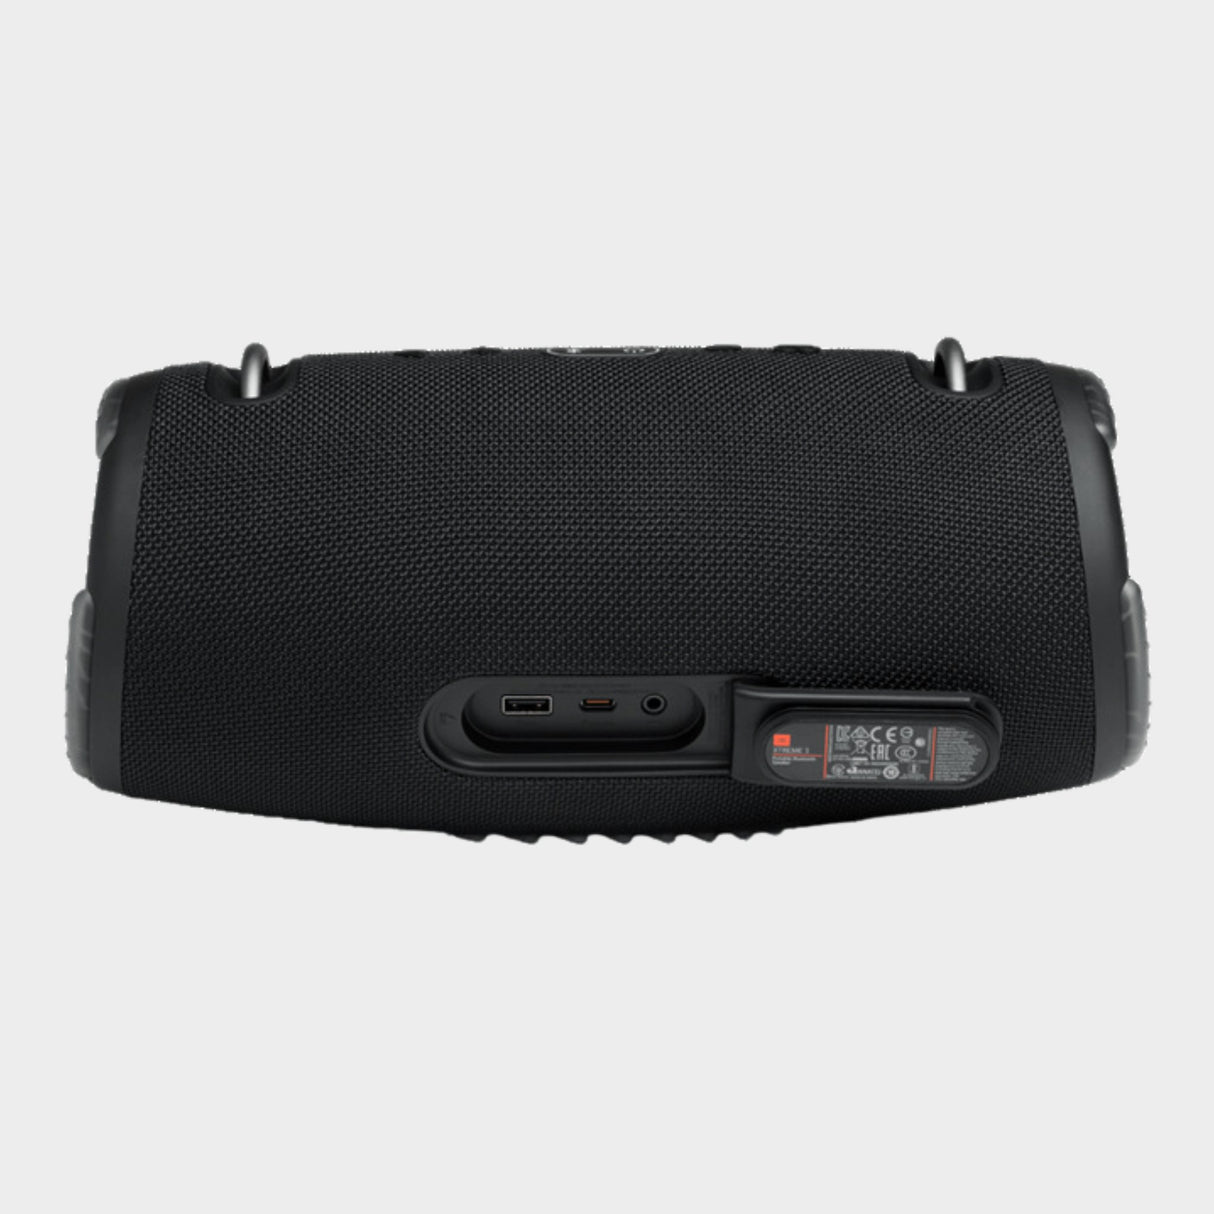 JBL Xtreme 3 – Portable Bluetooth Speaker - Black - KWT Tech Mart